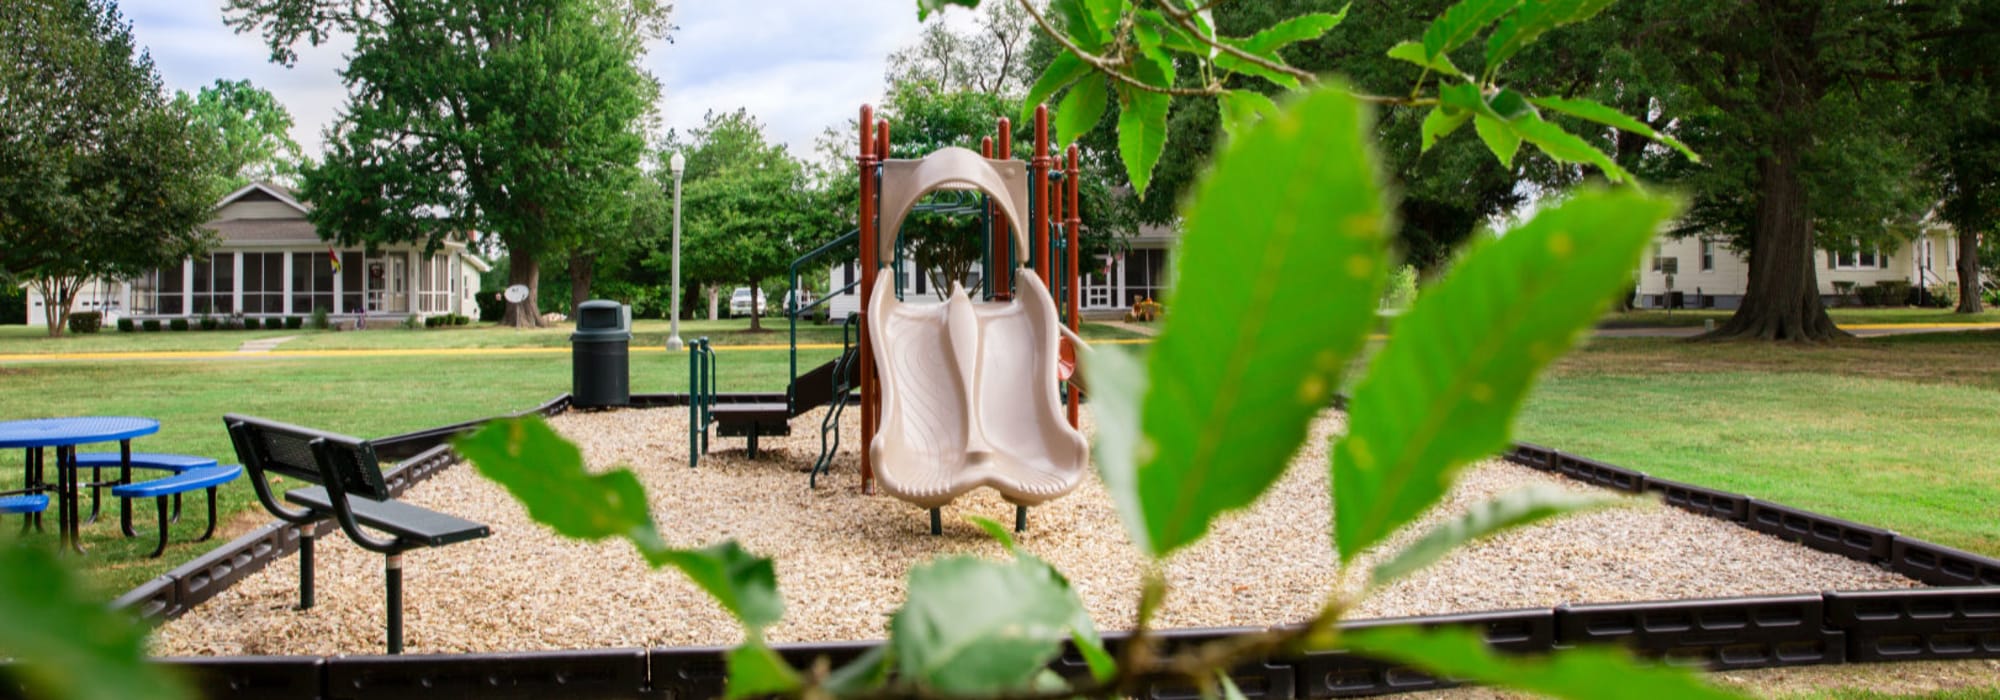 A playground at Dahlgren (NSF) in Dahlgren, Virginia